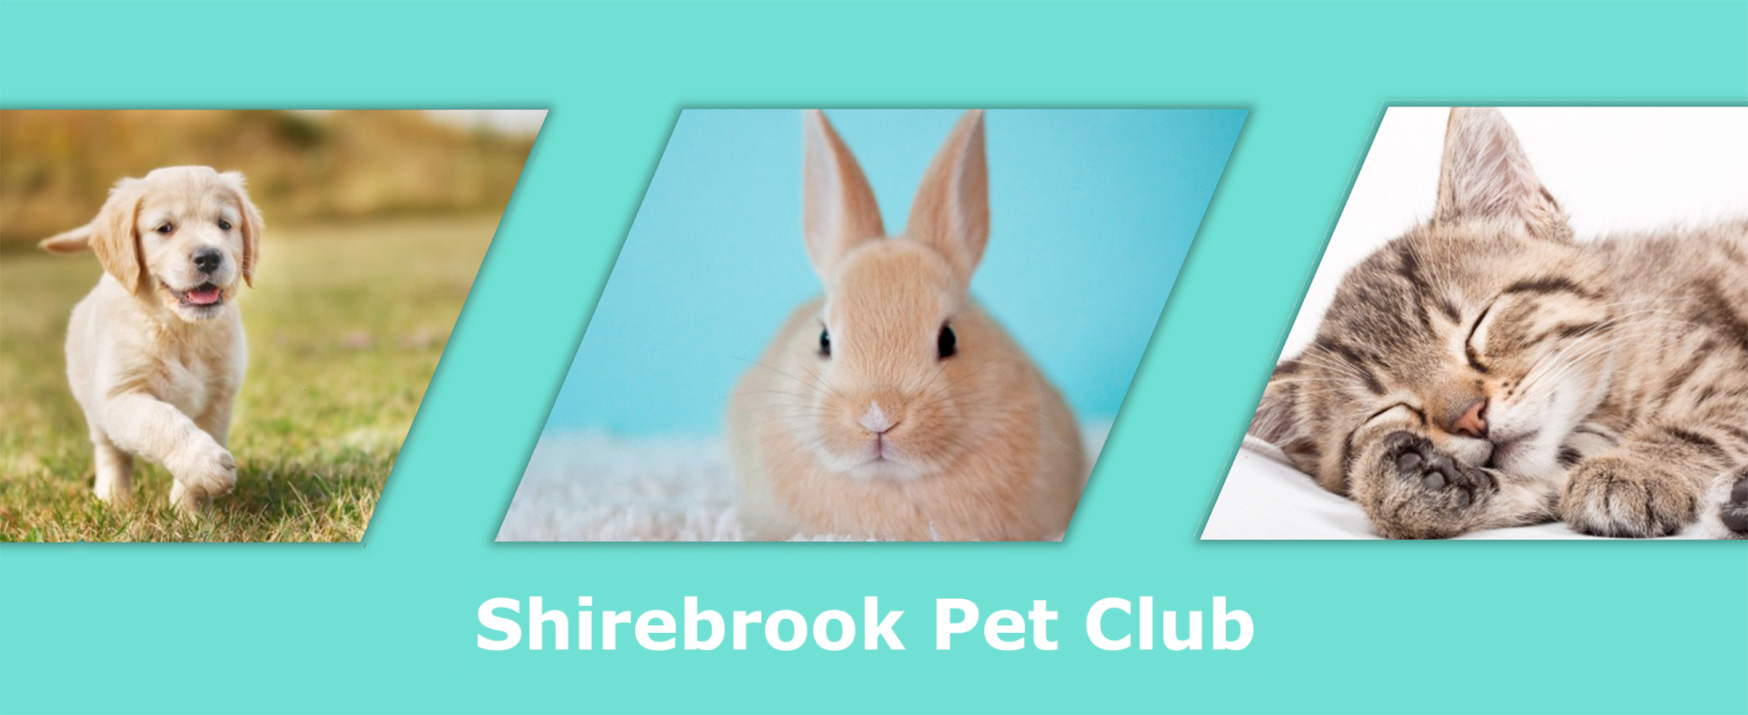 Shirebrook Pet Club